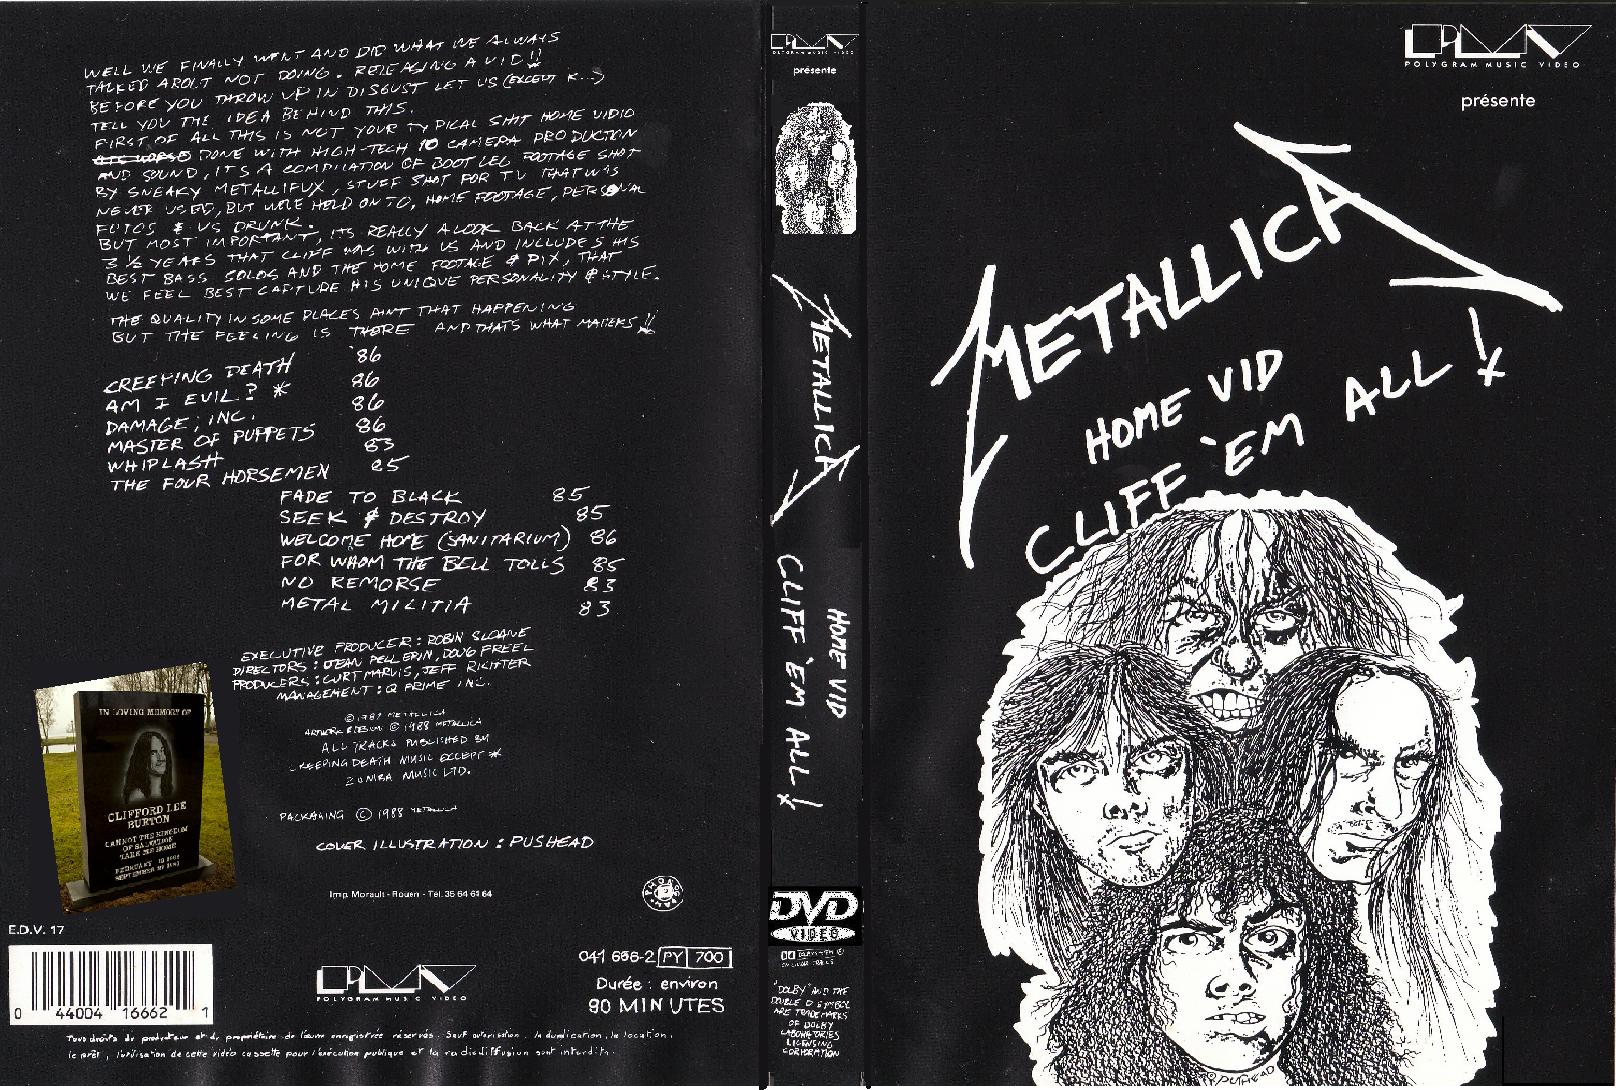 Jaquette DVD Metallica cliff em all !